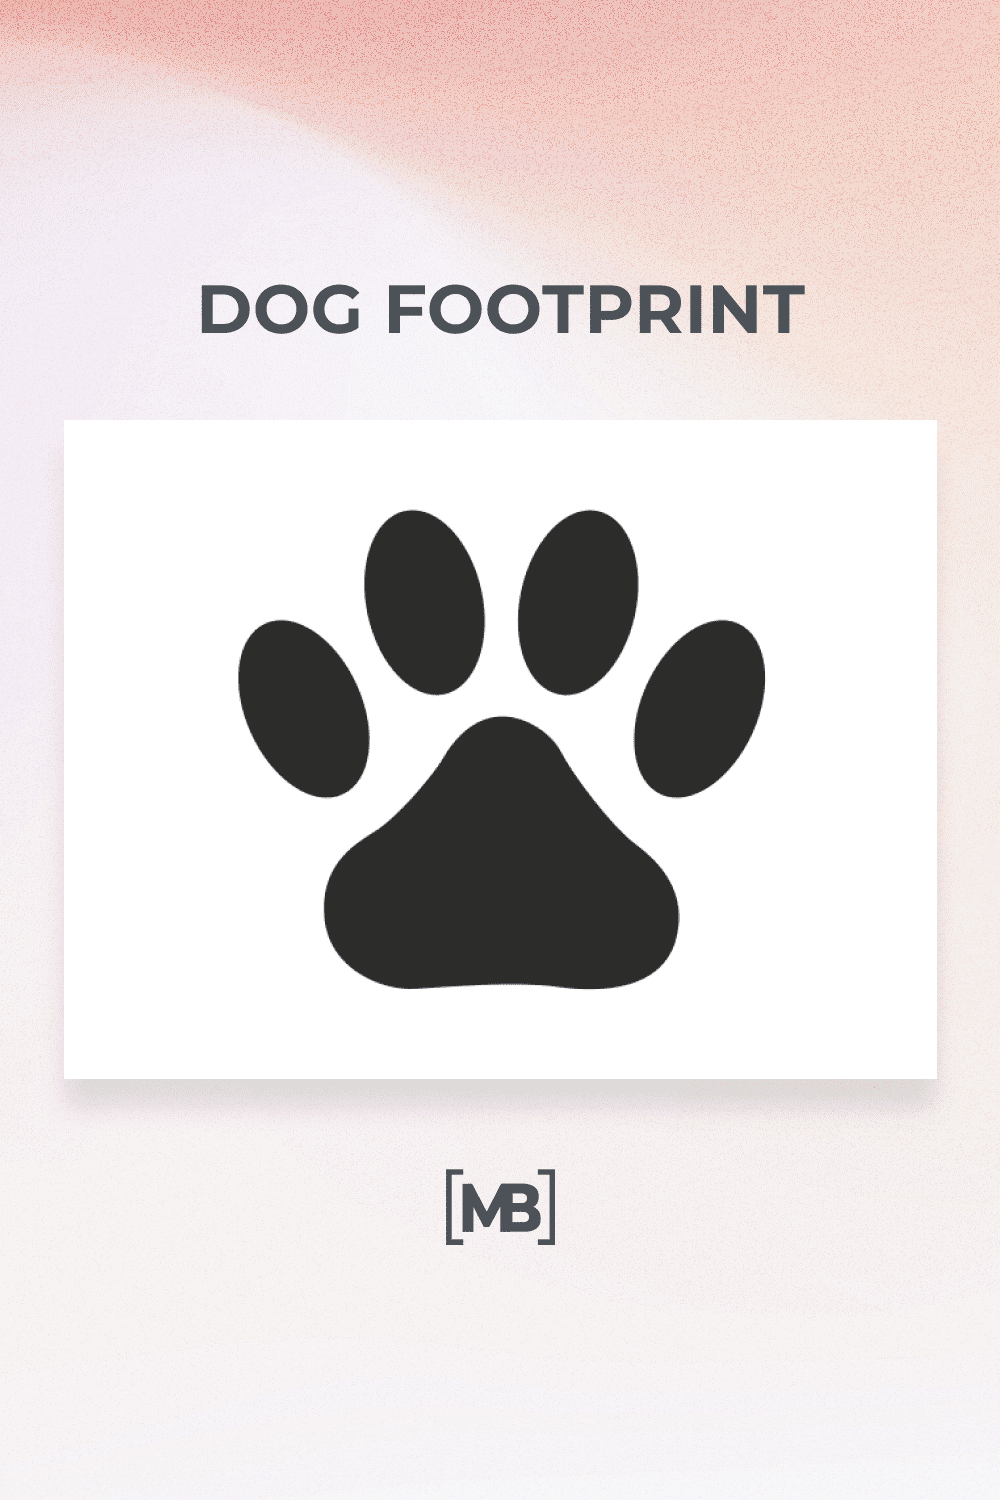 Dog footprint.